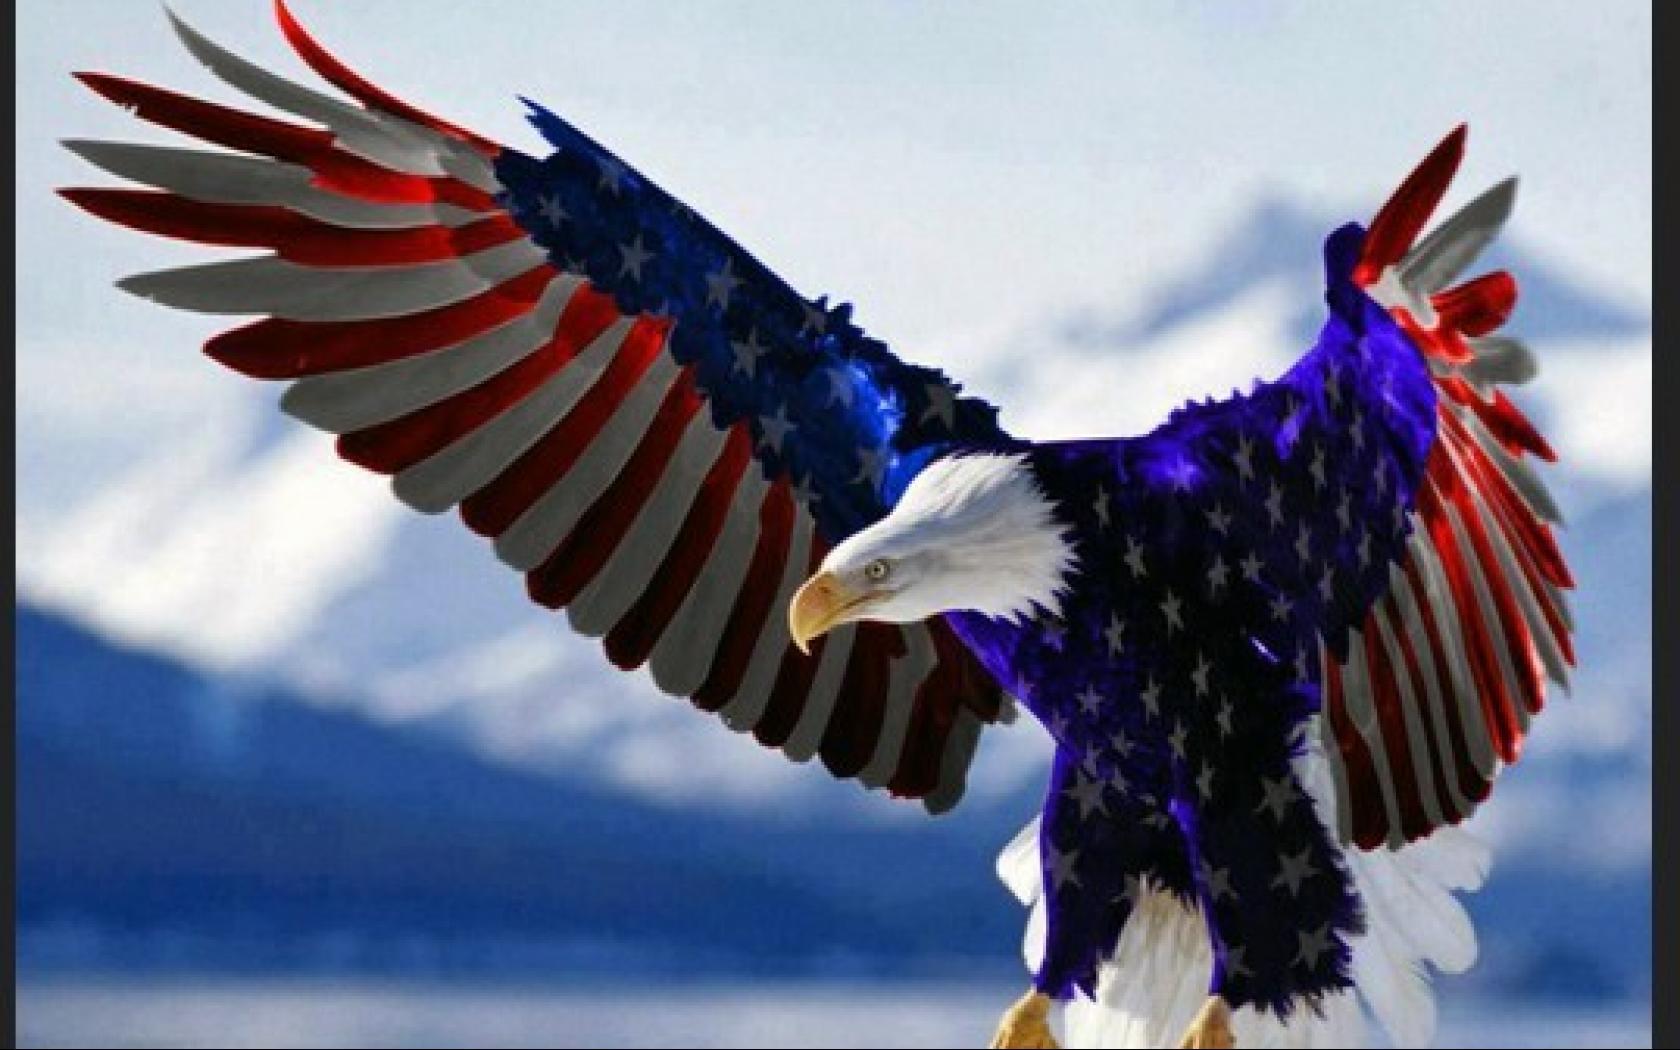 American Flag Image, High Quality Image of American Flag